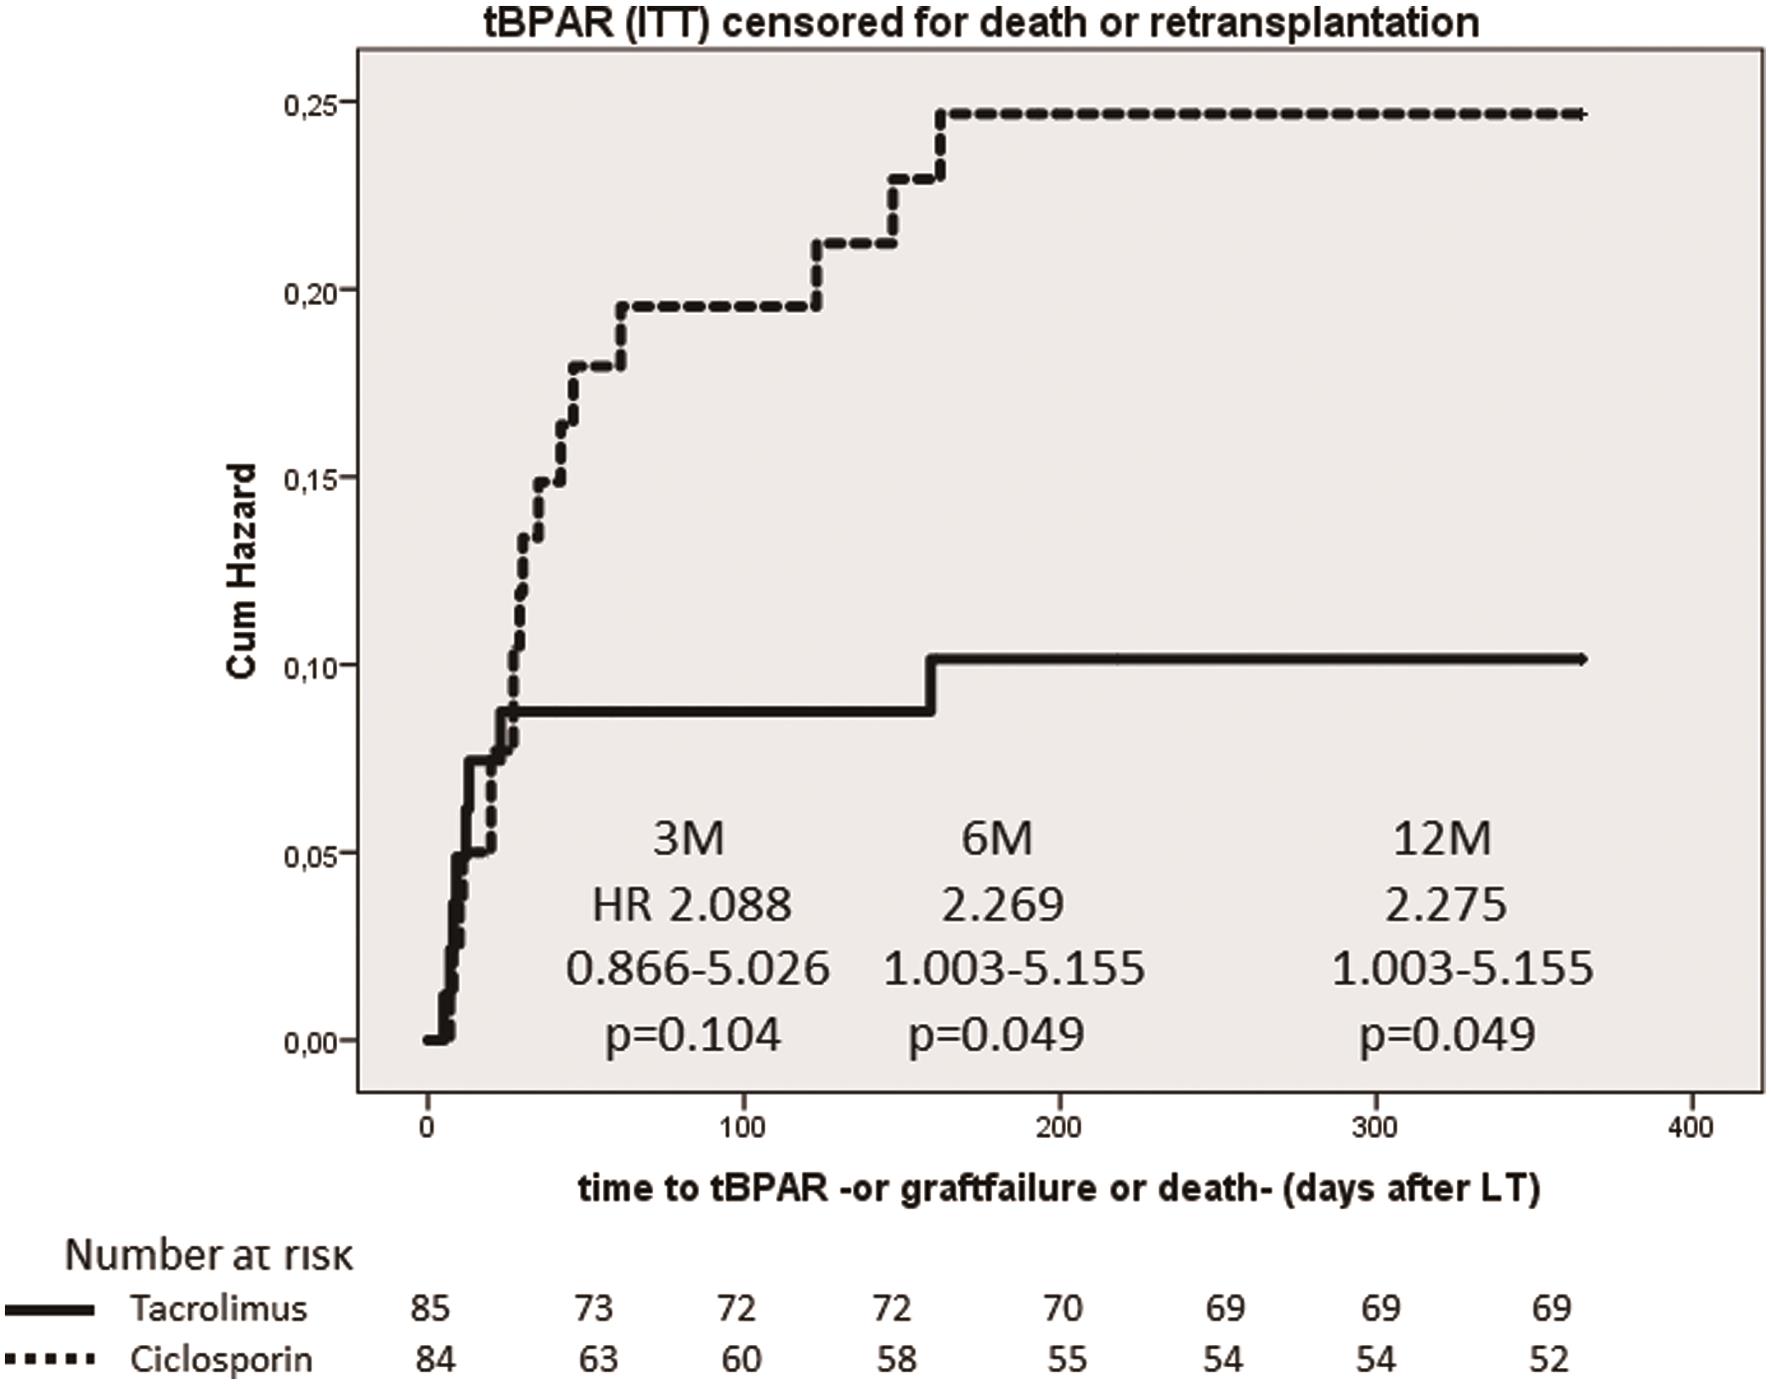 Cumulative incidence of tBPAR, censored for death and retransplantation.